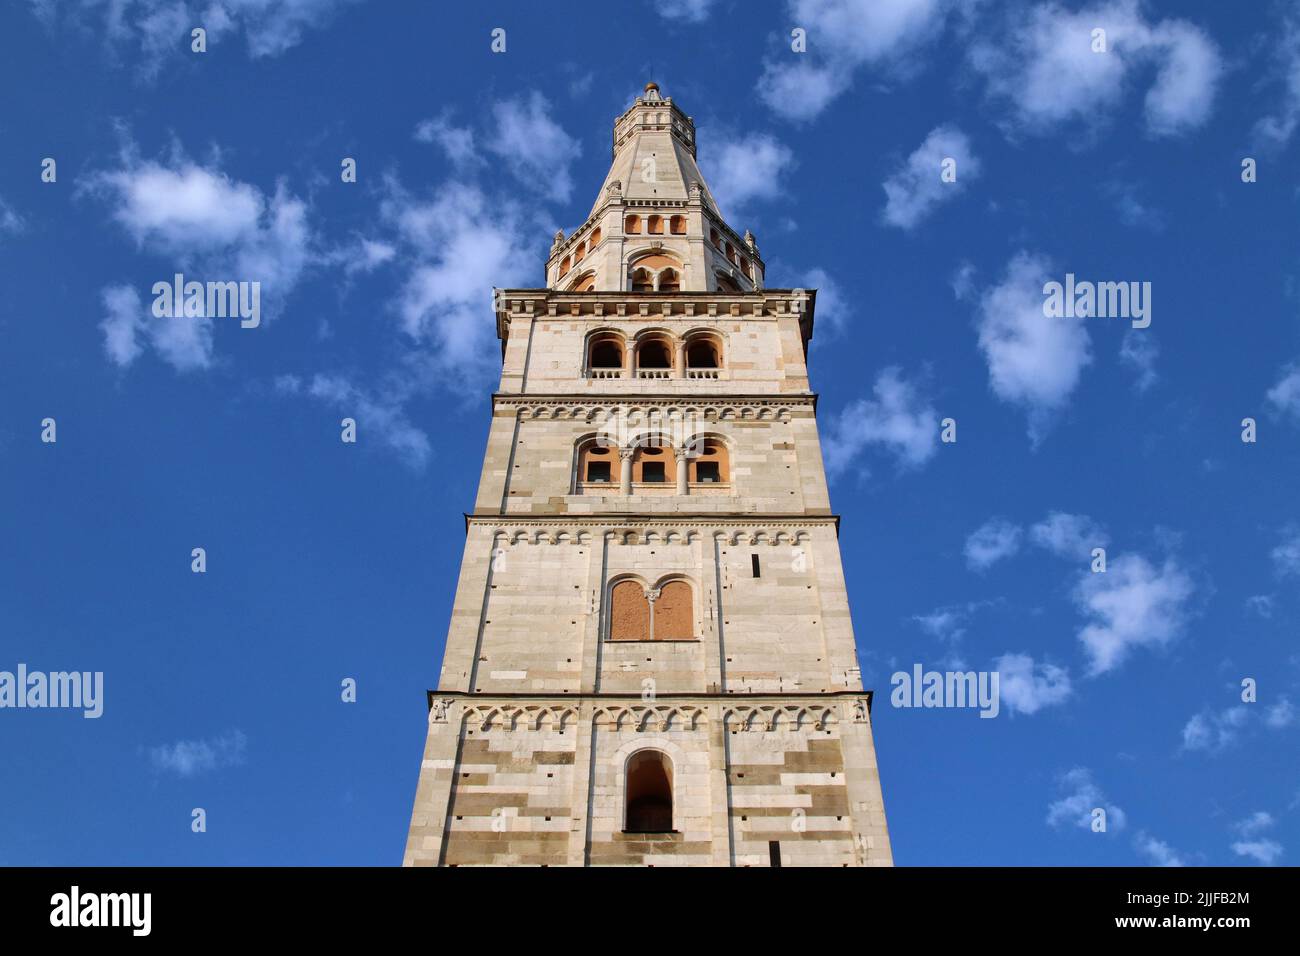 Tower of Ghirlandina (Garland), Modena, Emilia-Romagna, Italy, romanesque architecture Stock Photo